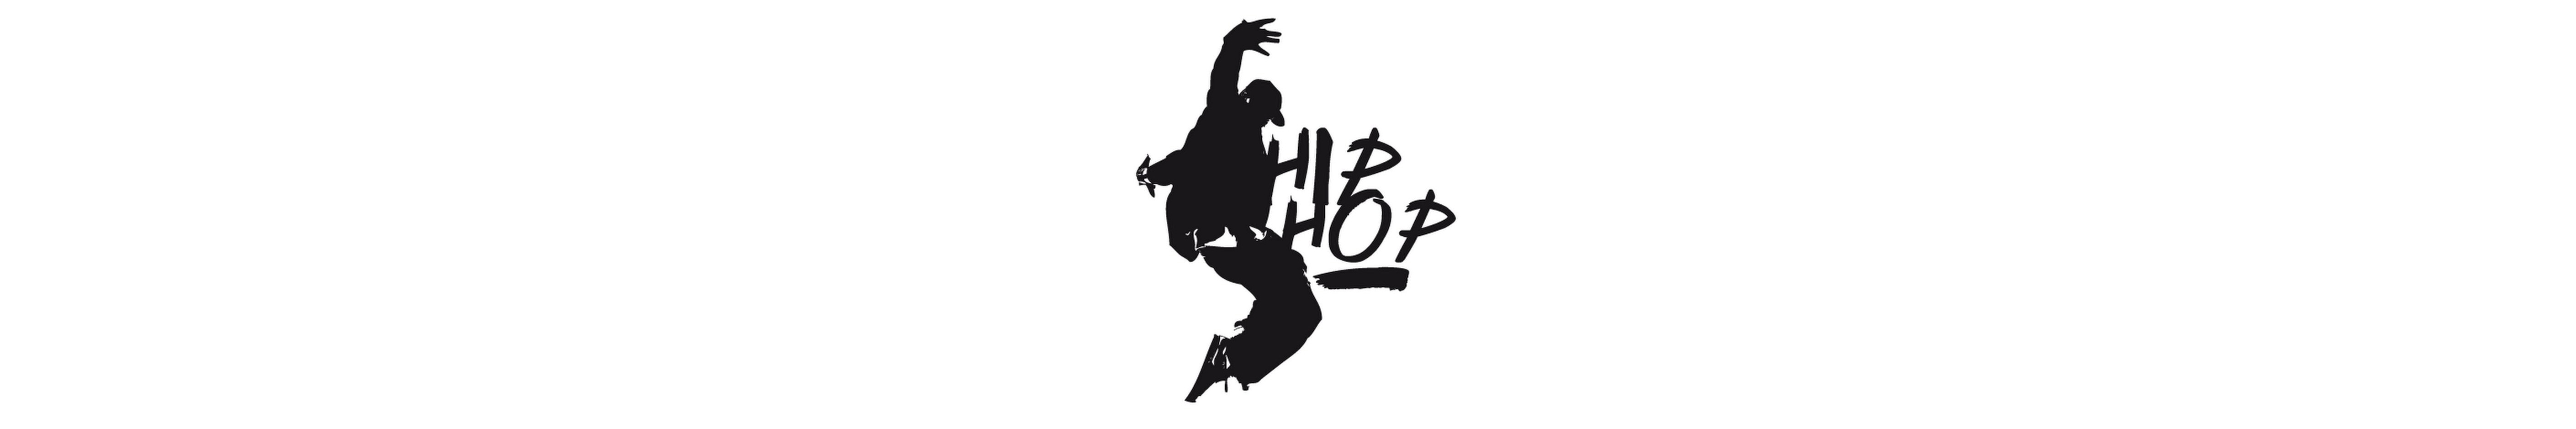 Hip-Hop, New Style, Break Dance, Street Dance!